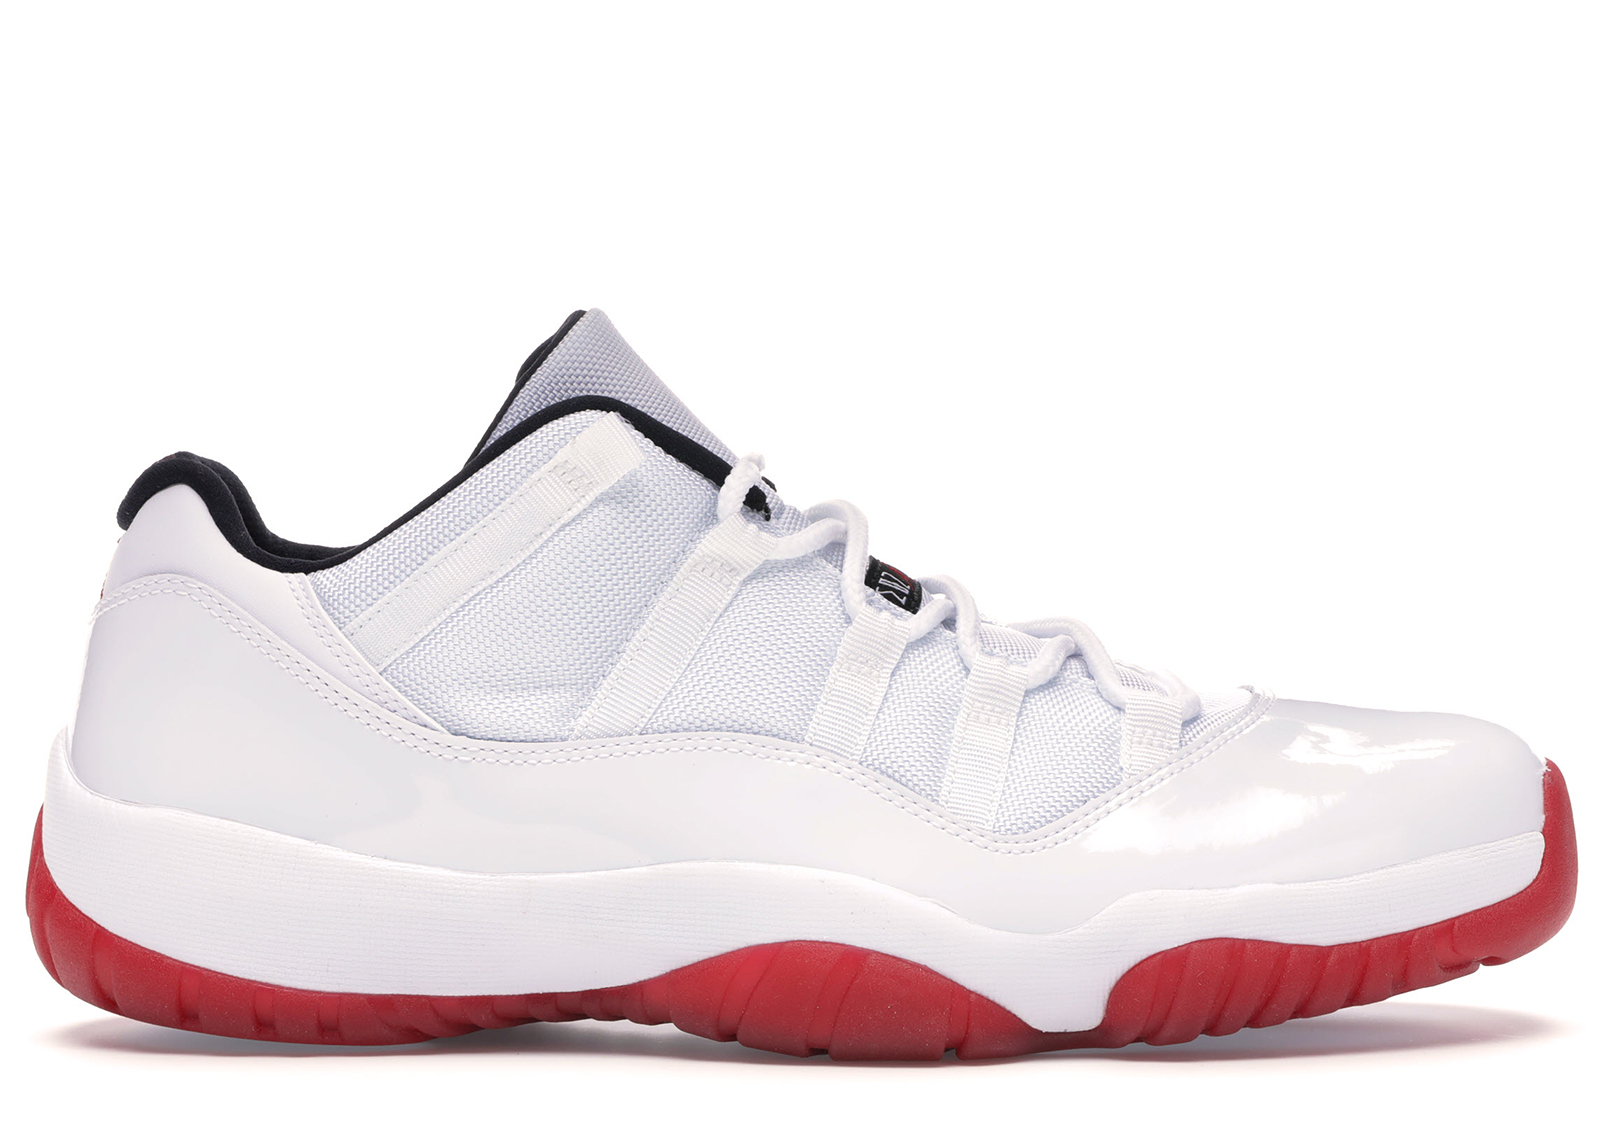 Jordan 11 Retro Low White Red (2012 